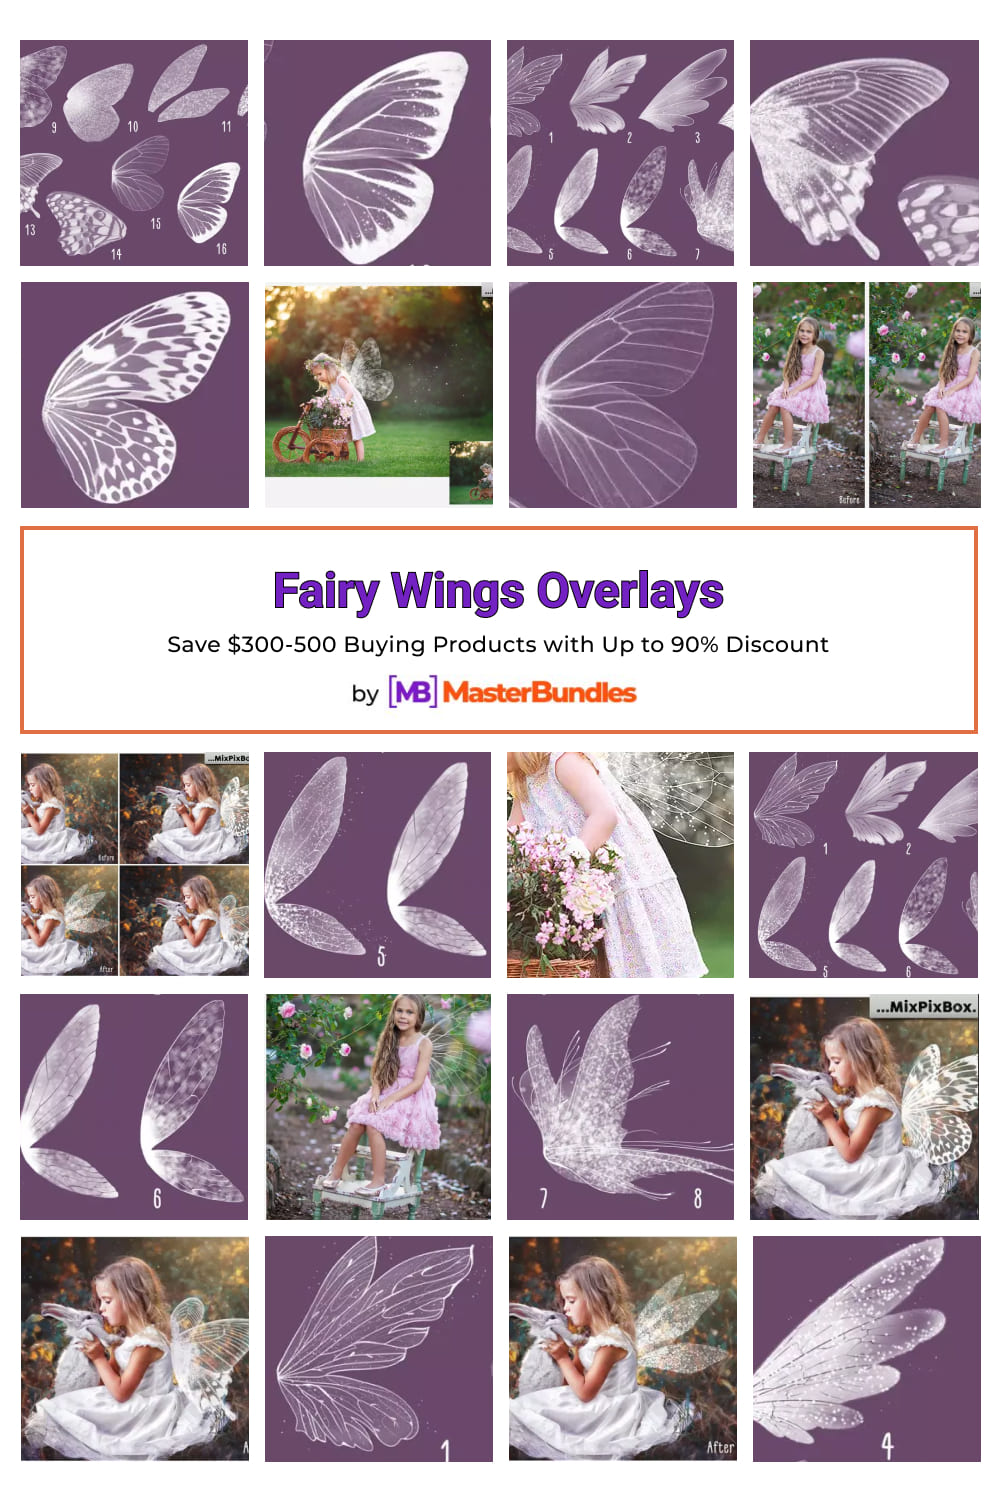 Fairy Wings Overlays Pinterest image.